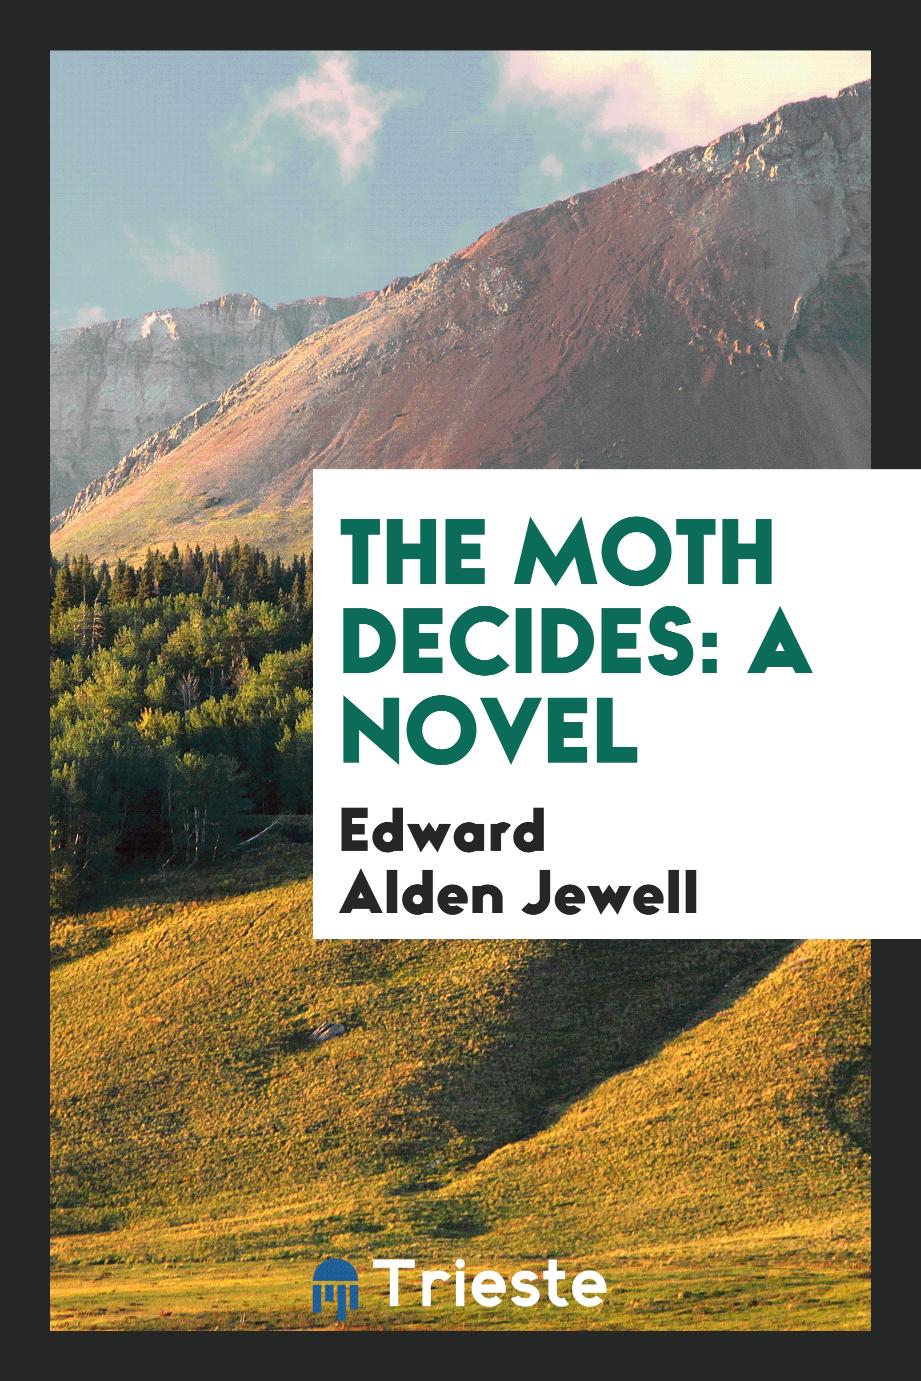 The moth decides: a novel